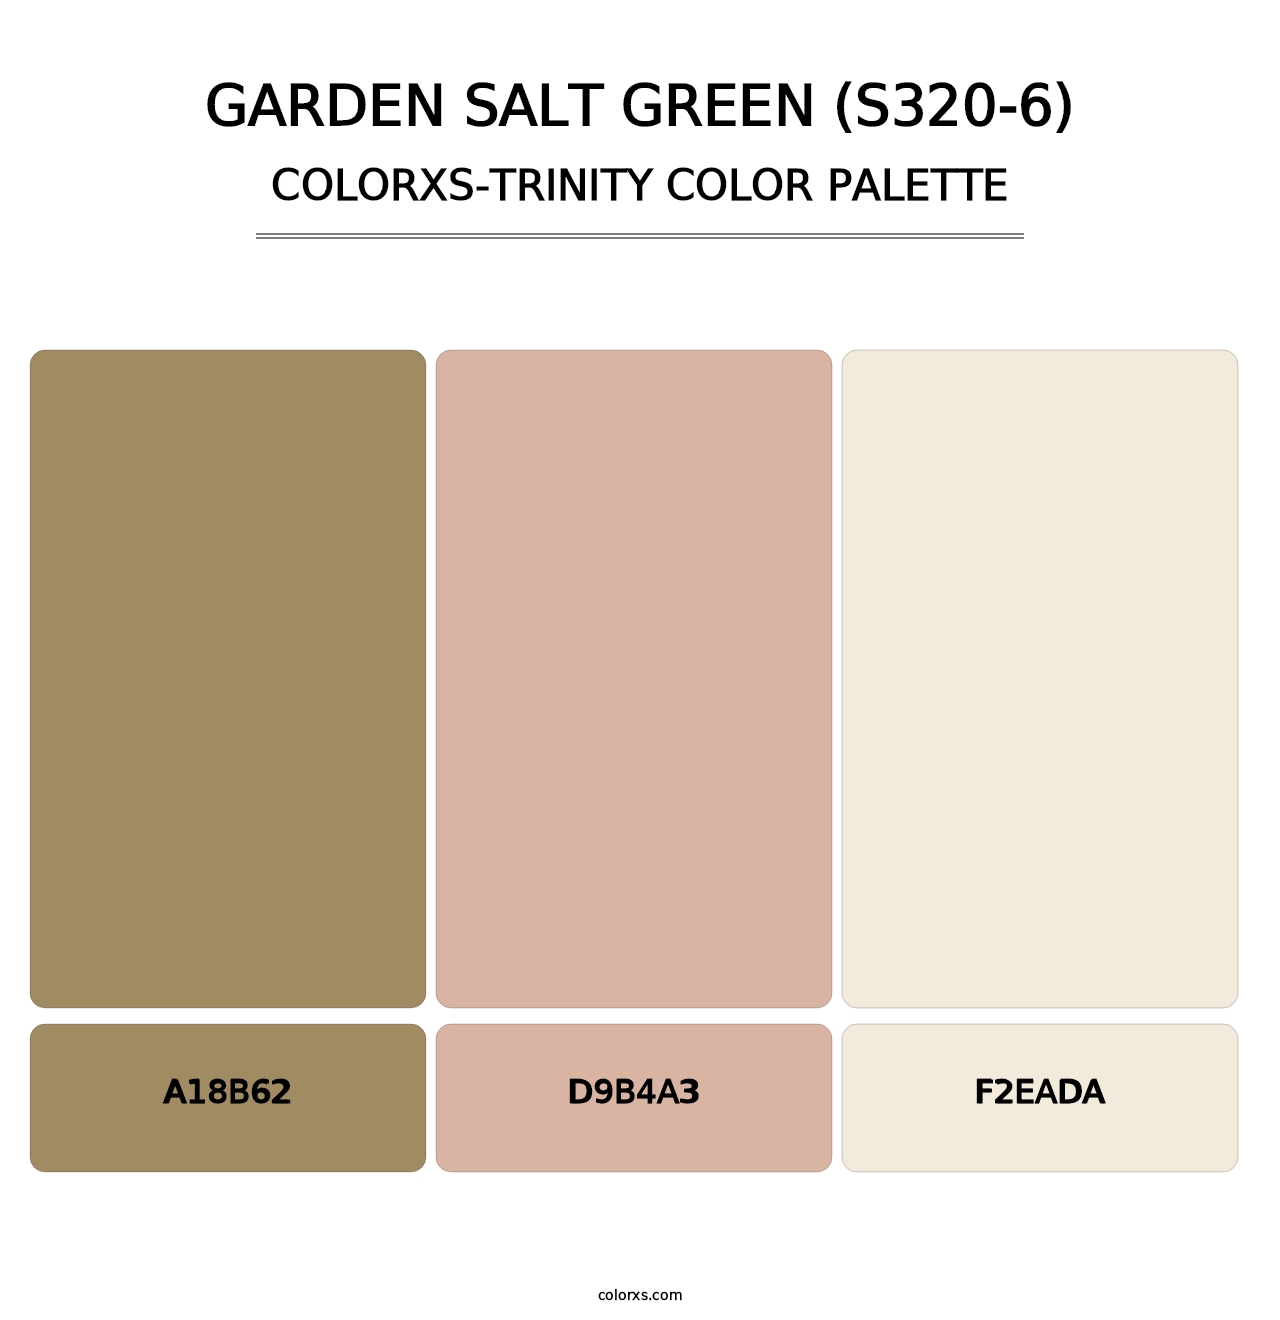 Garden Salt Green (S320-6) - Colorxs Trinity Palette